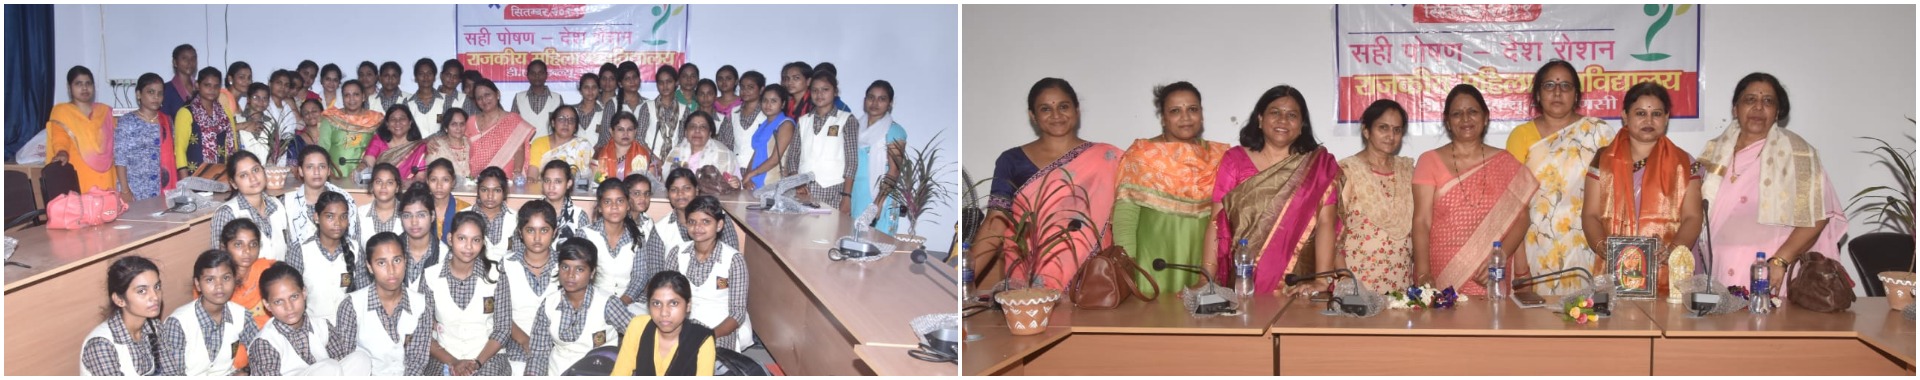 Government Girls Degree College, DLW, Varanasi